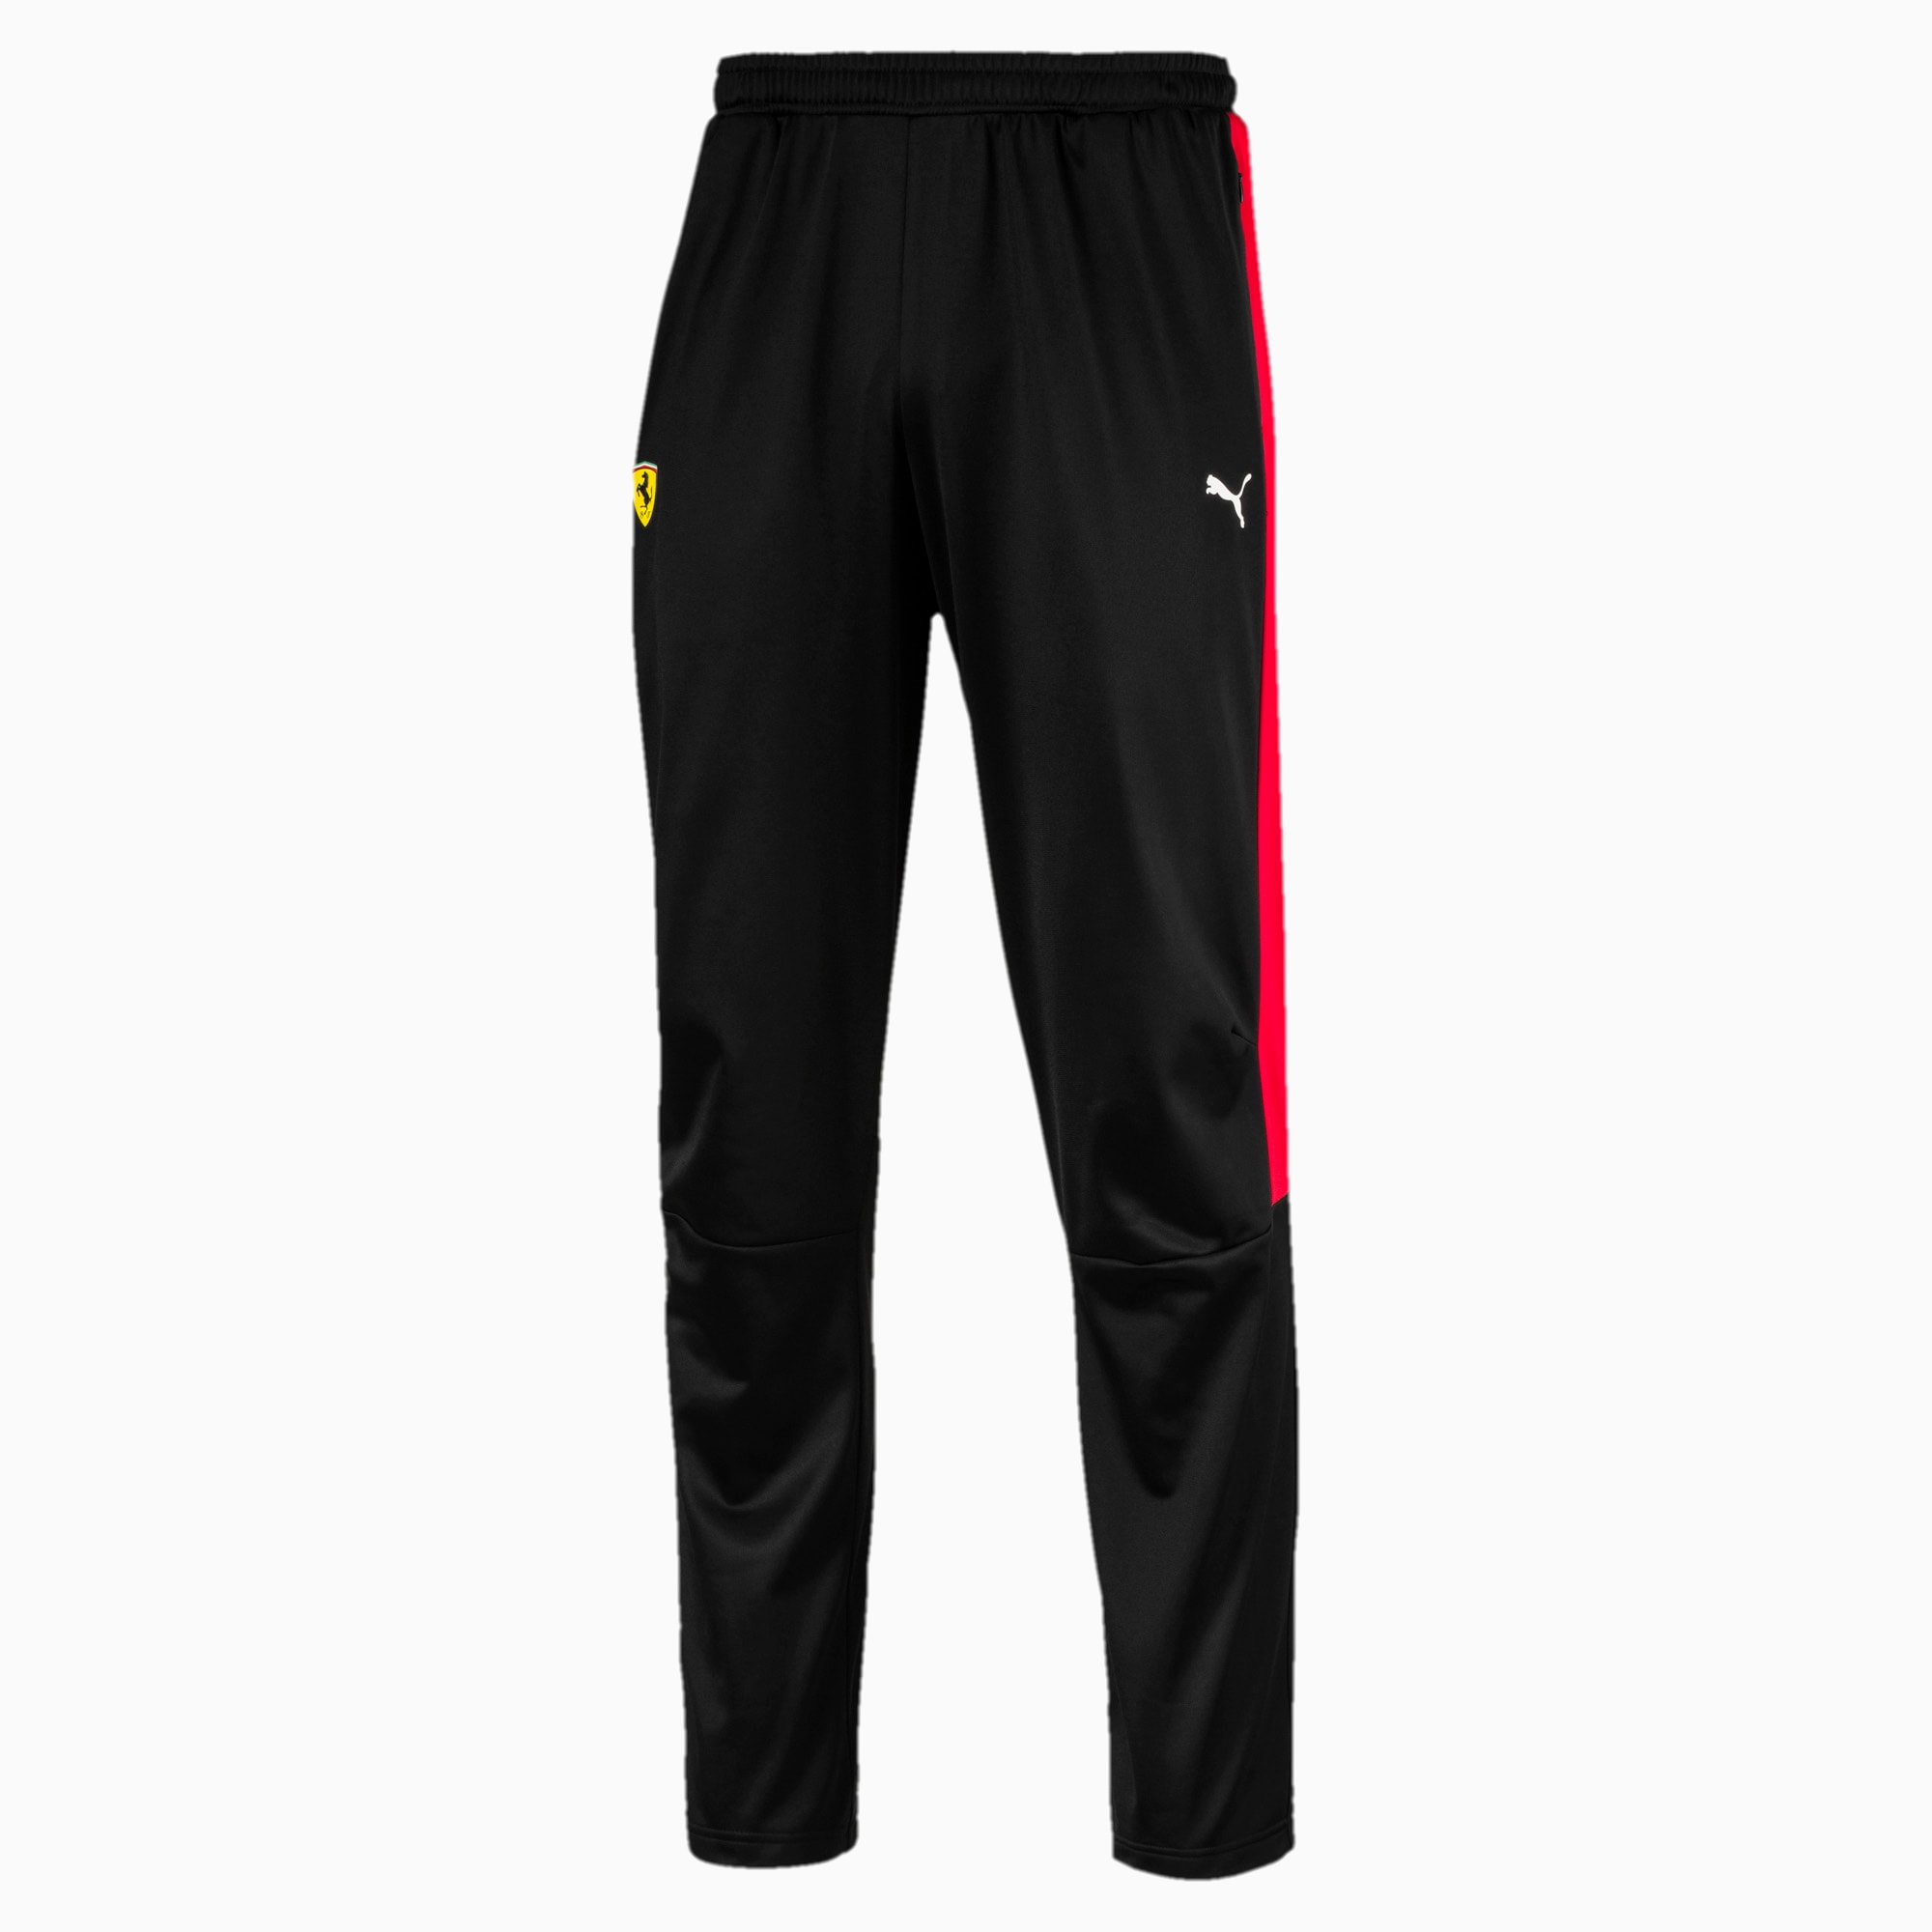 Pantalones deportivos Scuderia Ferrari T7 para hombre | PUMA EE. UU.